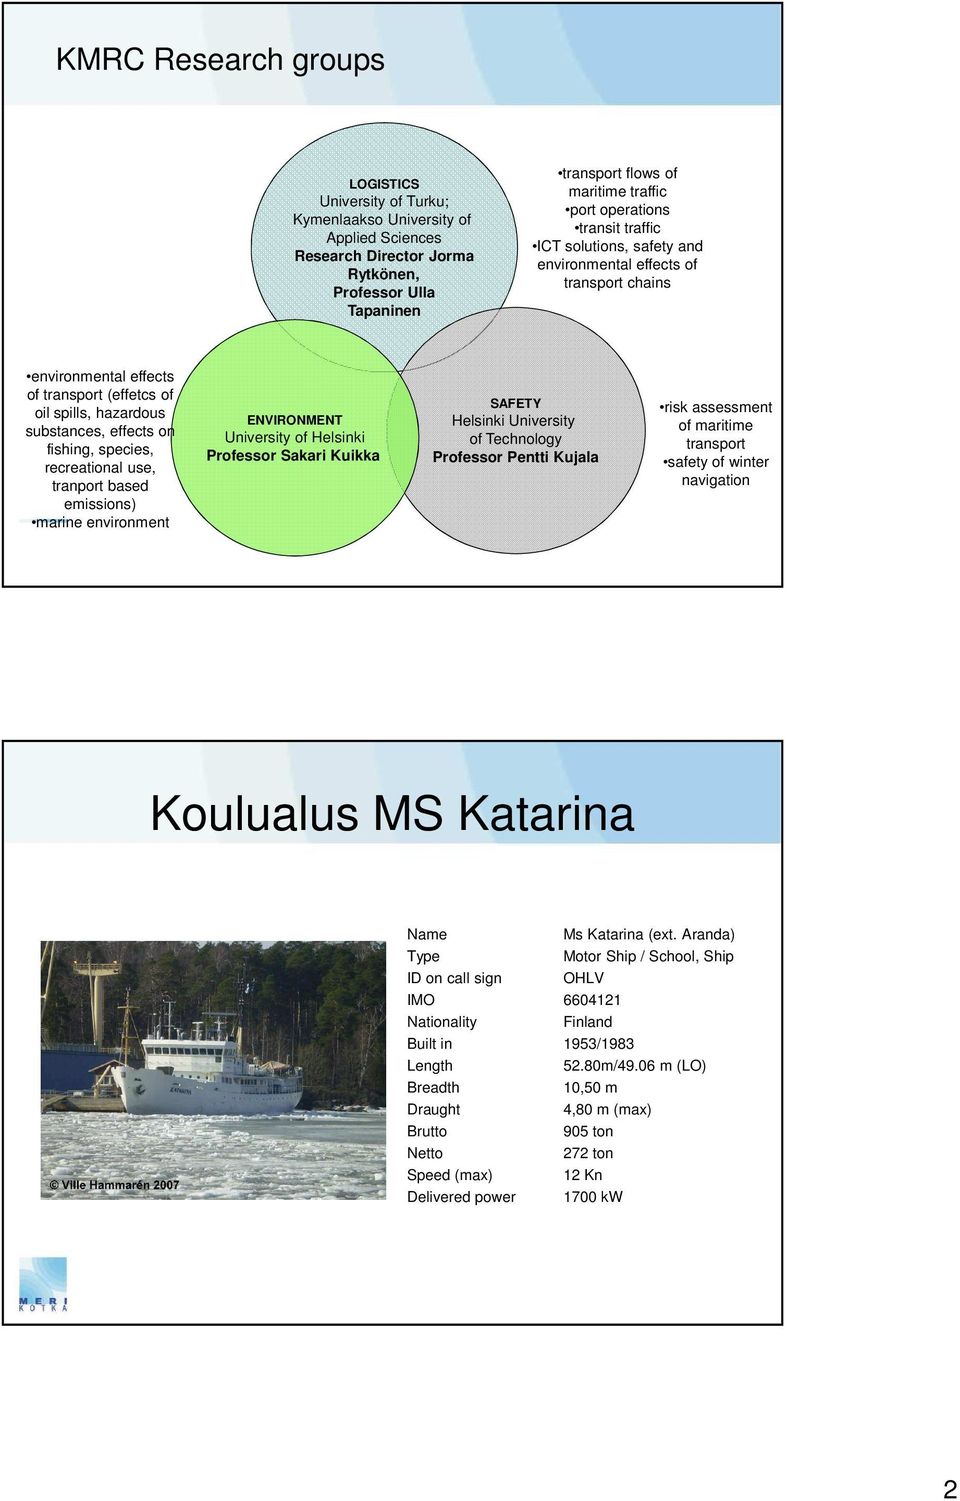 species, recreational use, tranport based emissions) marine environment ENVIRONMENT University of Helsinki Professor Sakari Kuikka SAFETY Helsinki University of Technology Professor Pentti Kujala